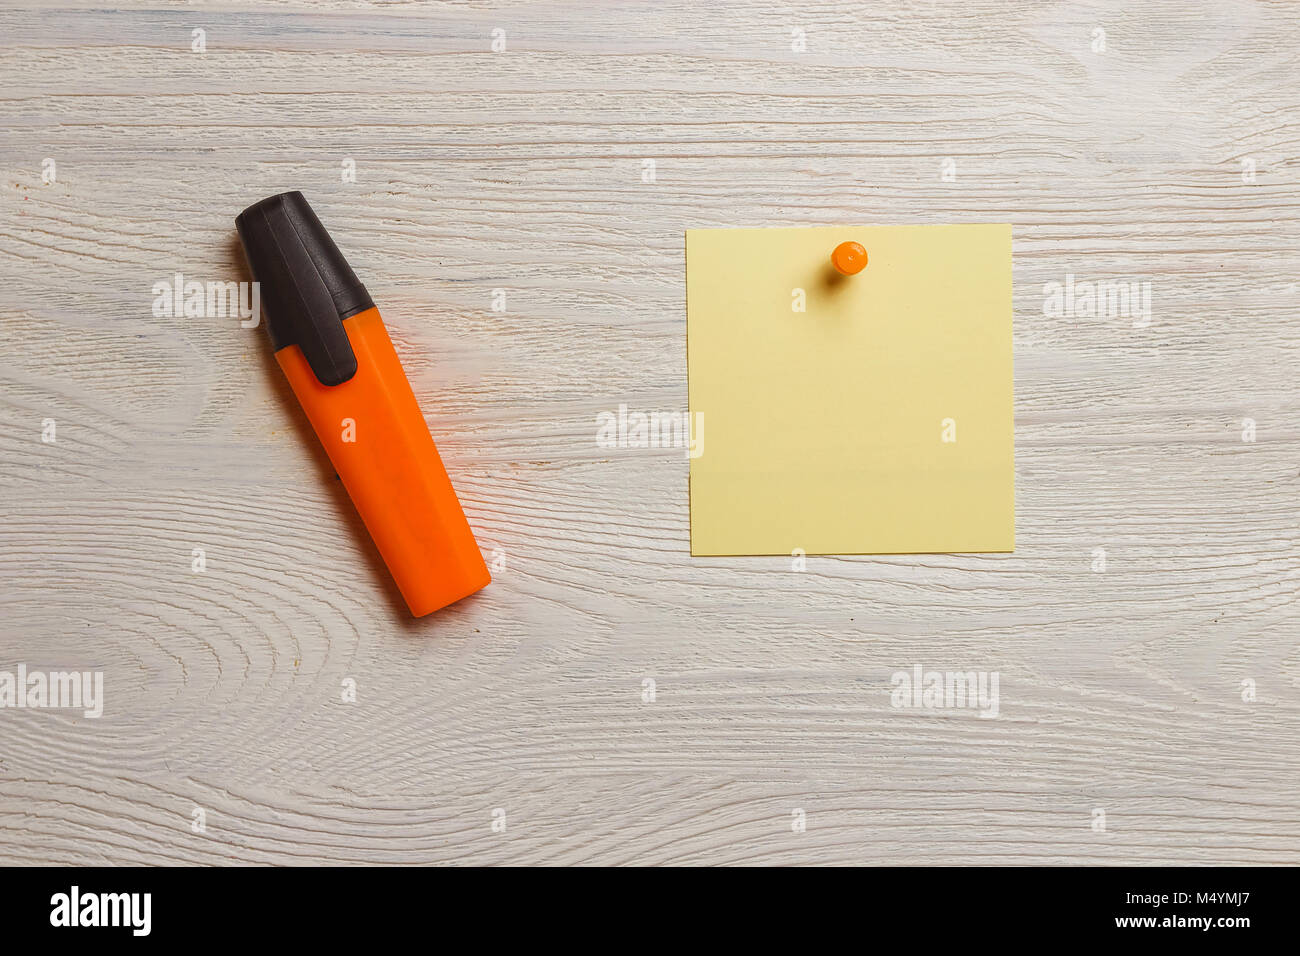 Stationary, Blank Yellow Sticker, Orange Pushpins, Marker on White Wooden Board. Memo, Reminder. Stock Photo